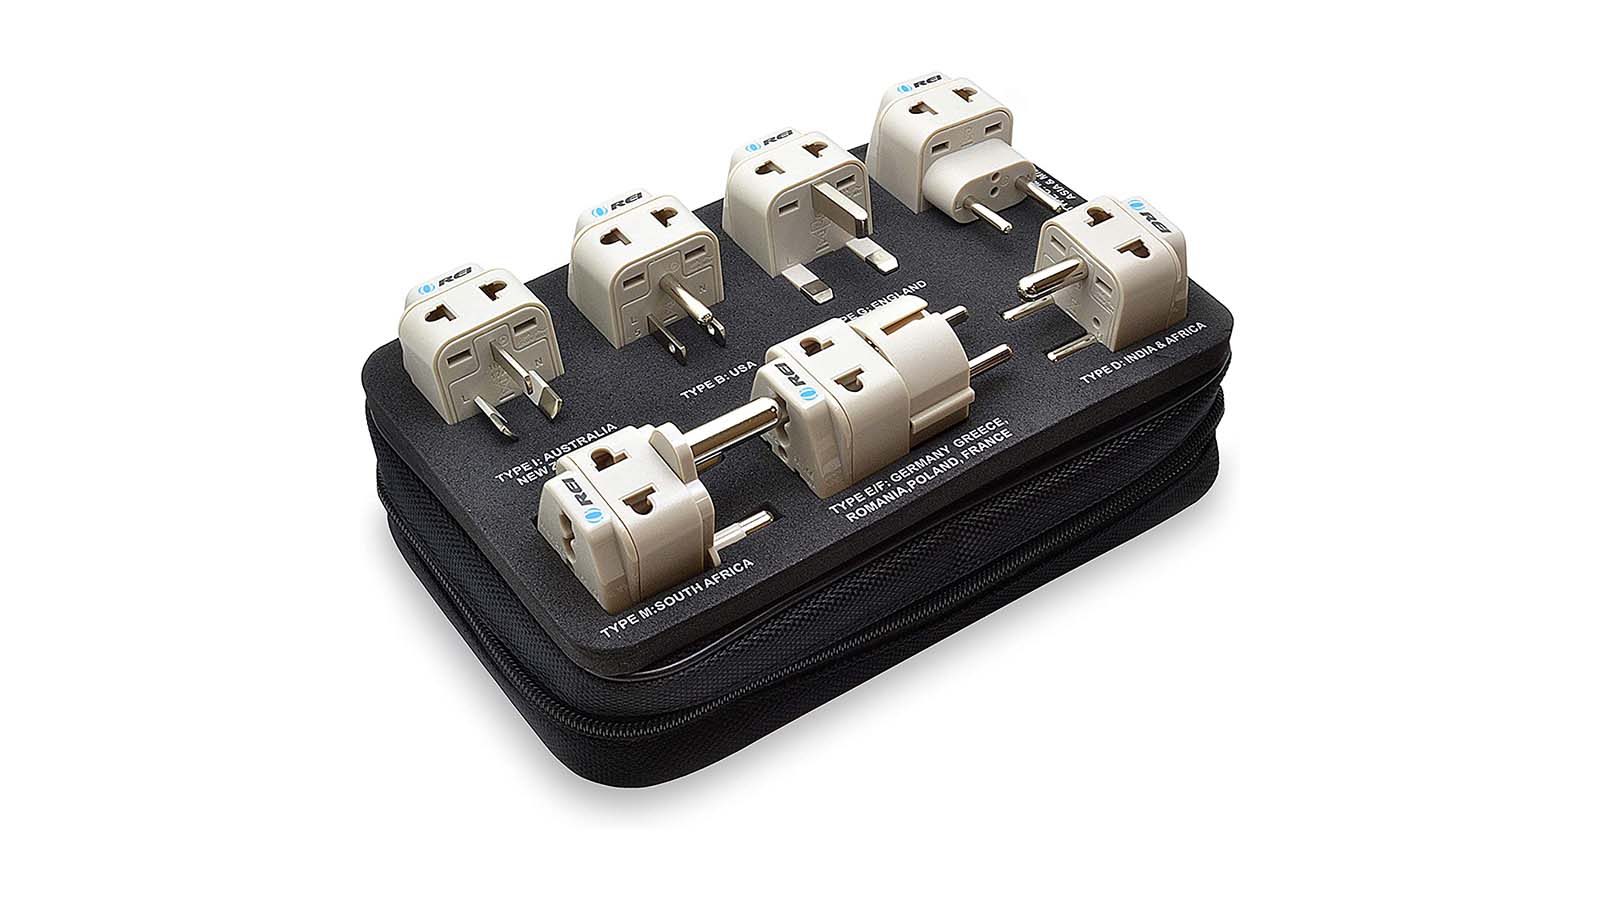 Generic Plug Adaptor EU US UK AU Travel AC Power Adaptor Plug